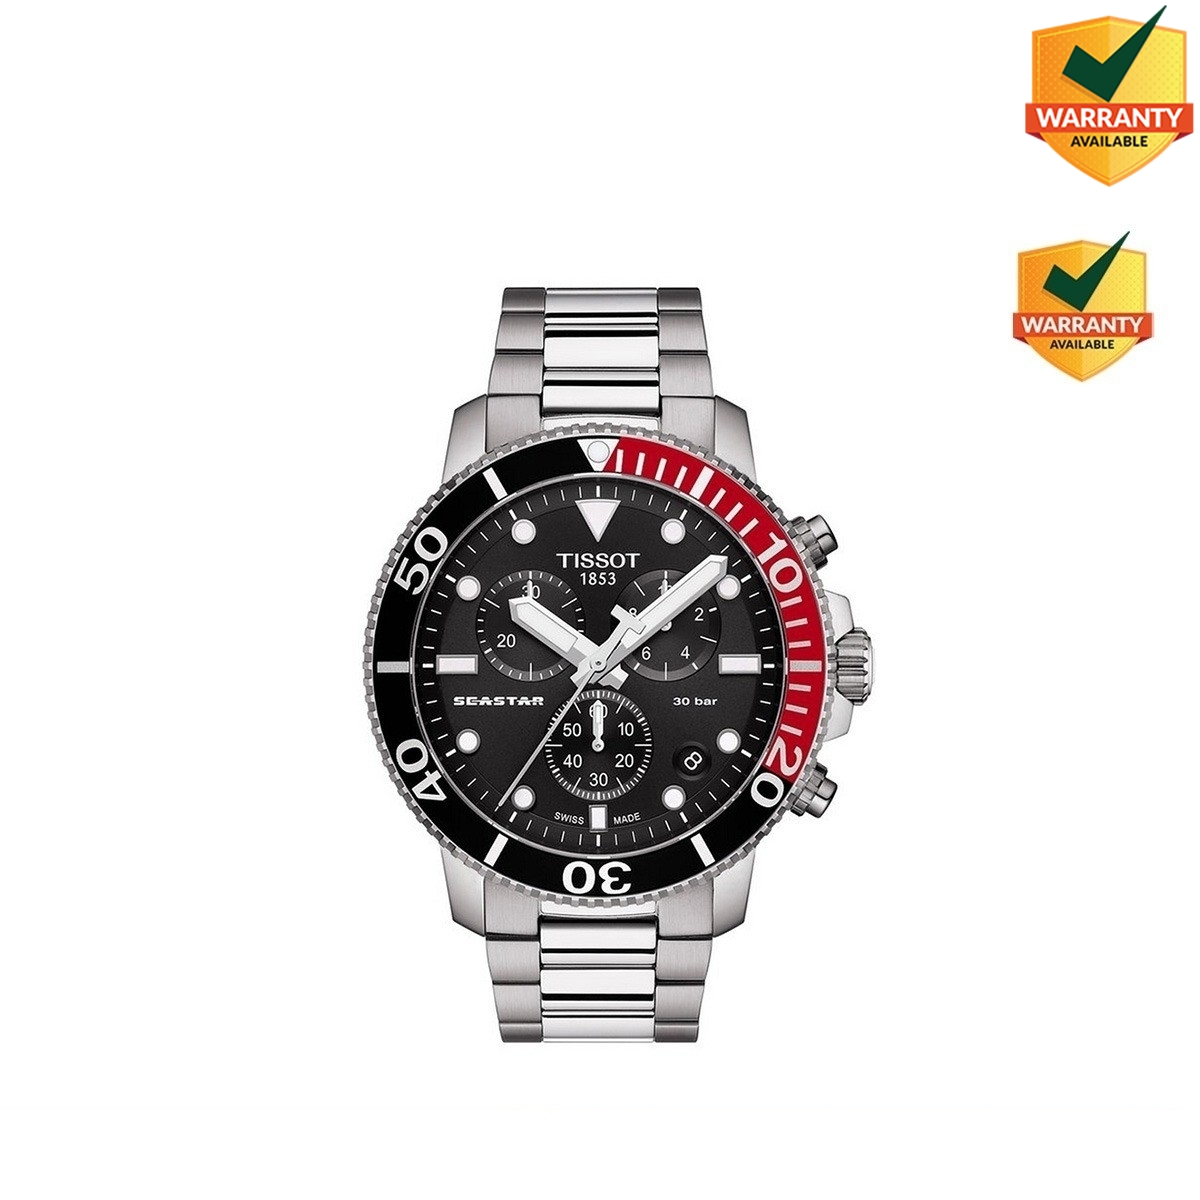 New Tissot Seastar 1000 Chronograph Black Dial Men's Watch - T120.417.11.051.01